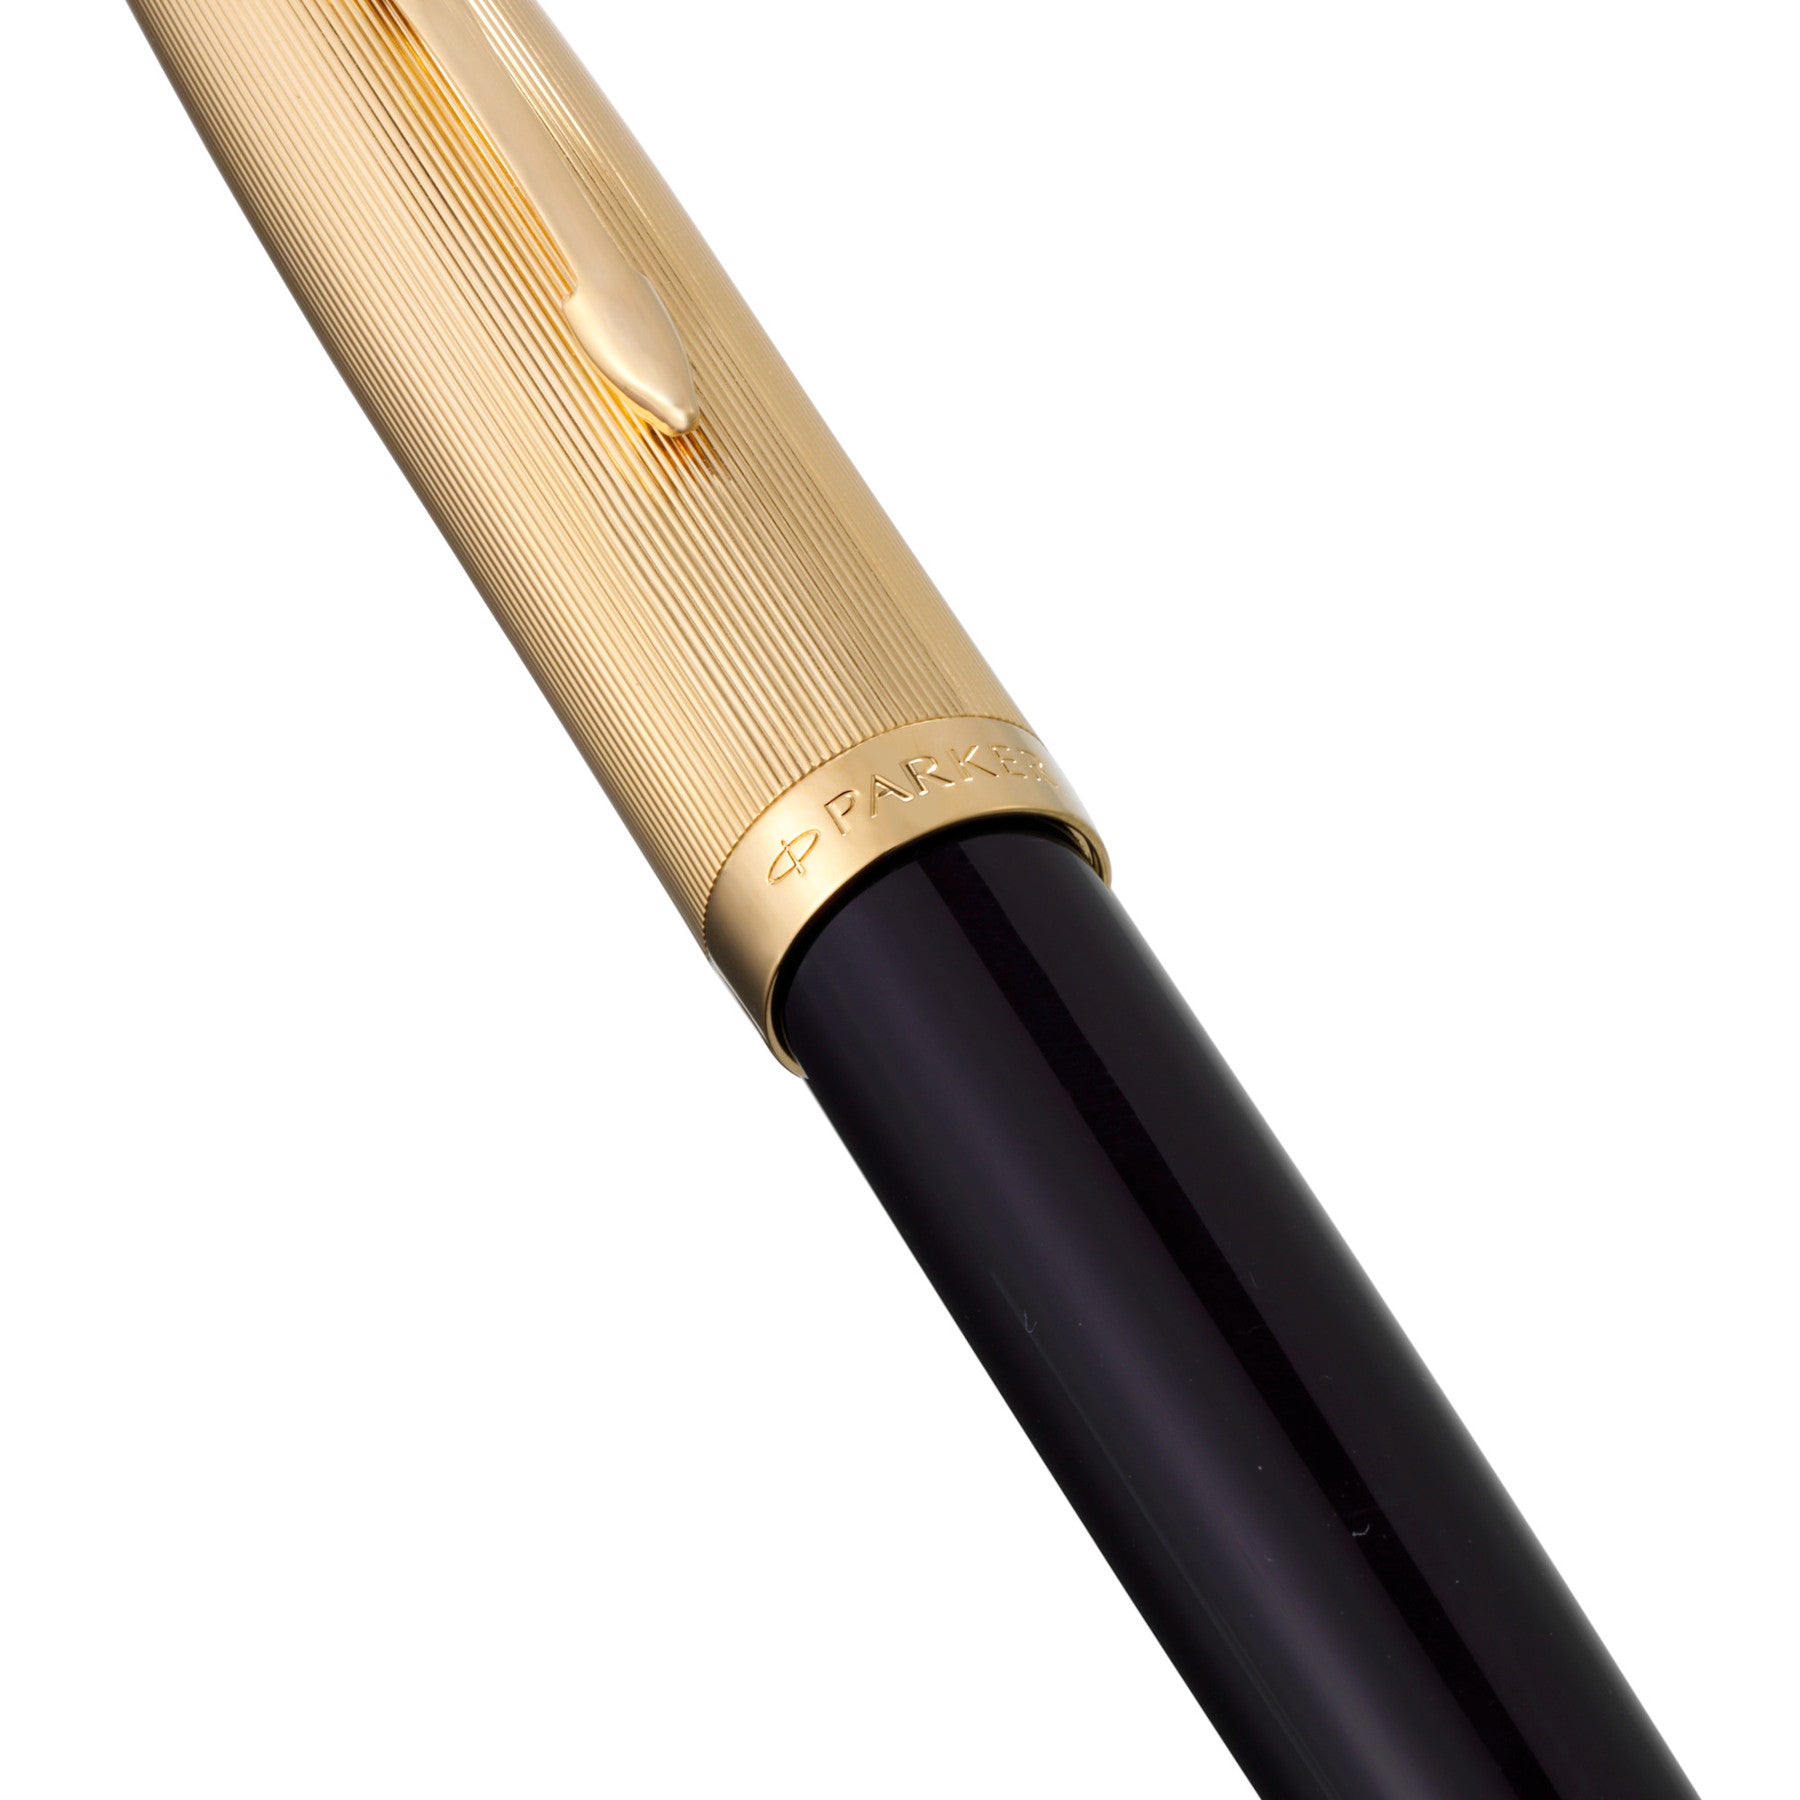 Parker 51 Deluxe Black GT Fountain pen